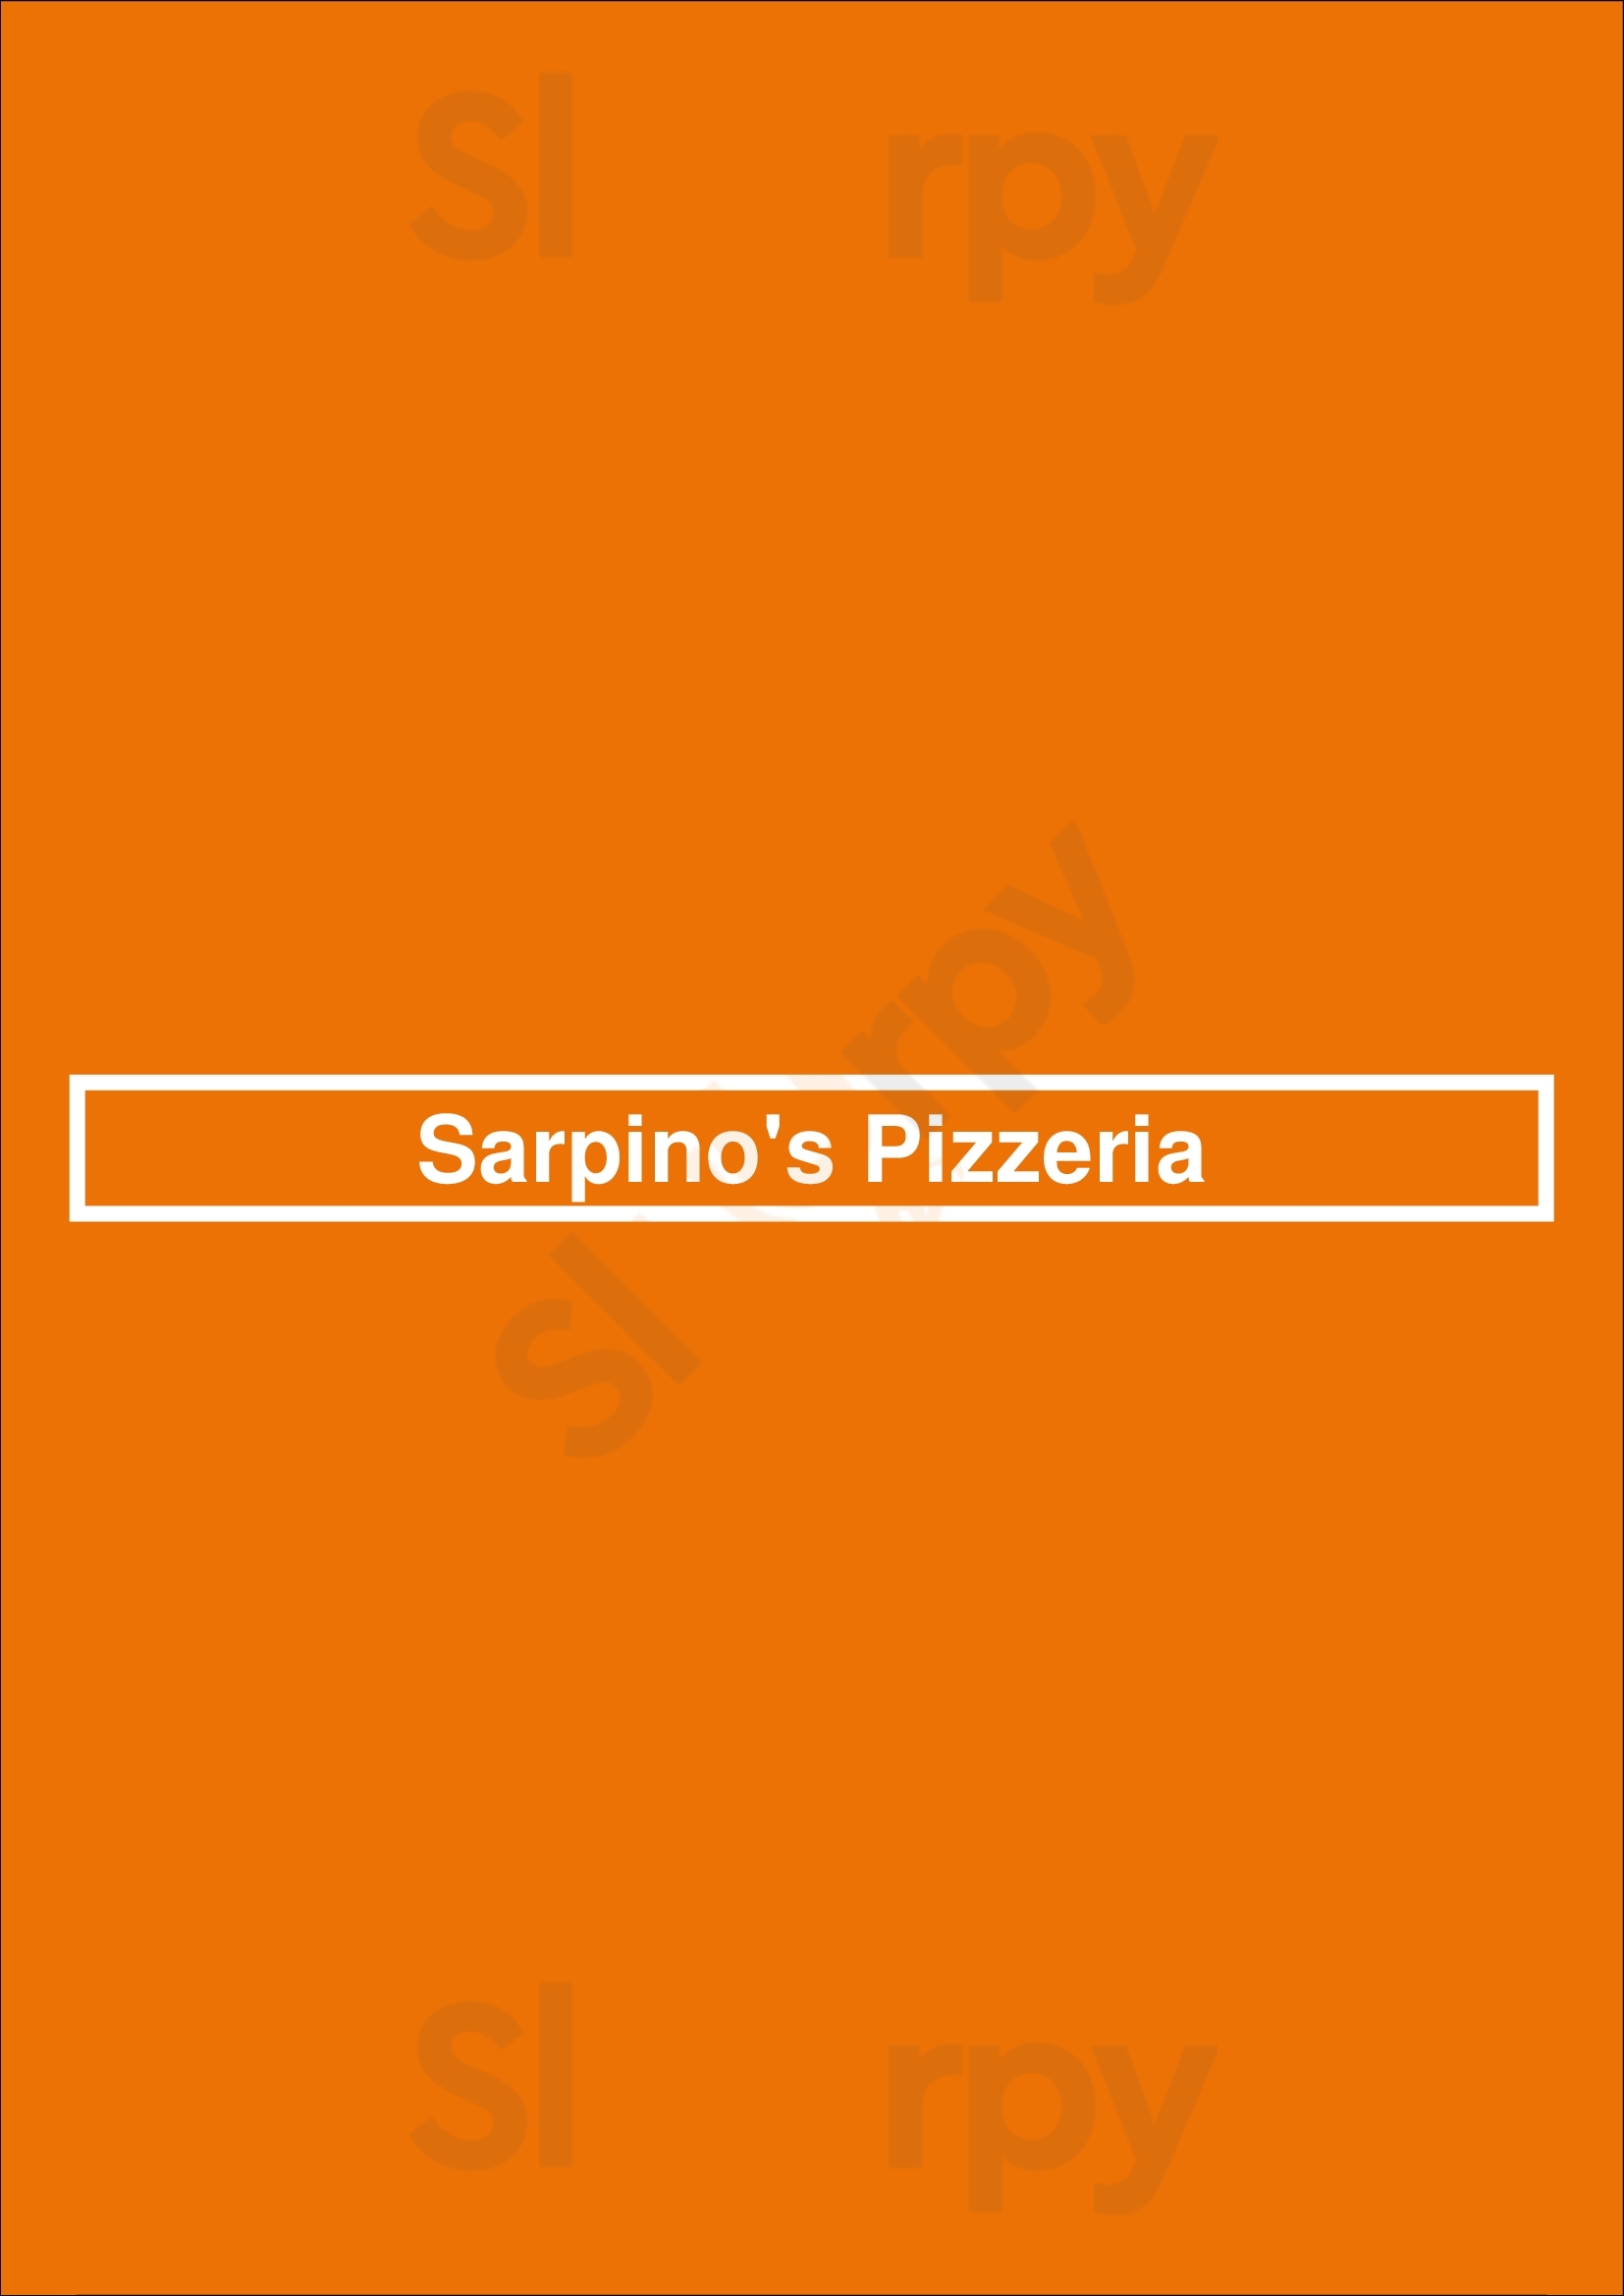 Sarpino's Pizzeria Minneapolis Menu - 1